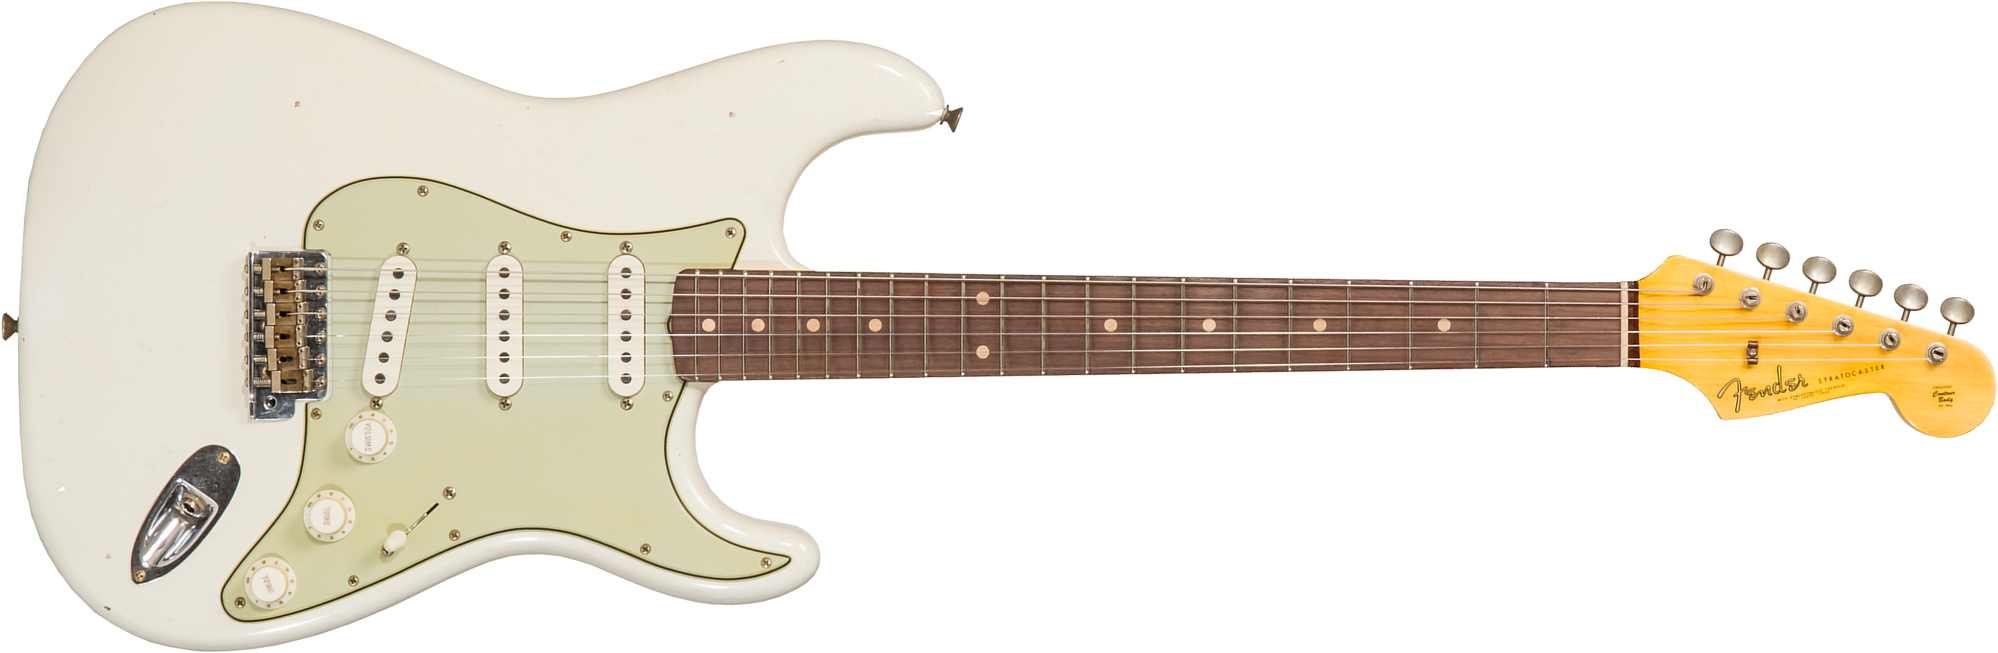 Fender Custom Shop Strat 1962/63 3s Trem Rw #cz565163 - Journeyman Relic Olympic White - Str shape electric guitar - Main picture